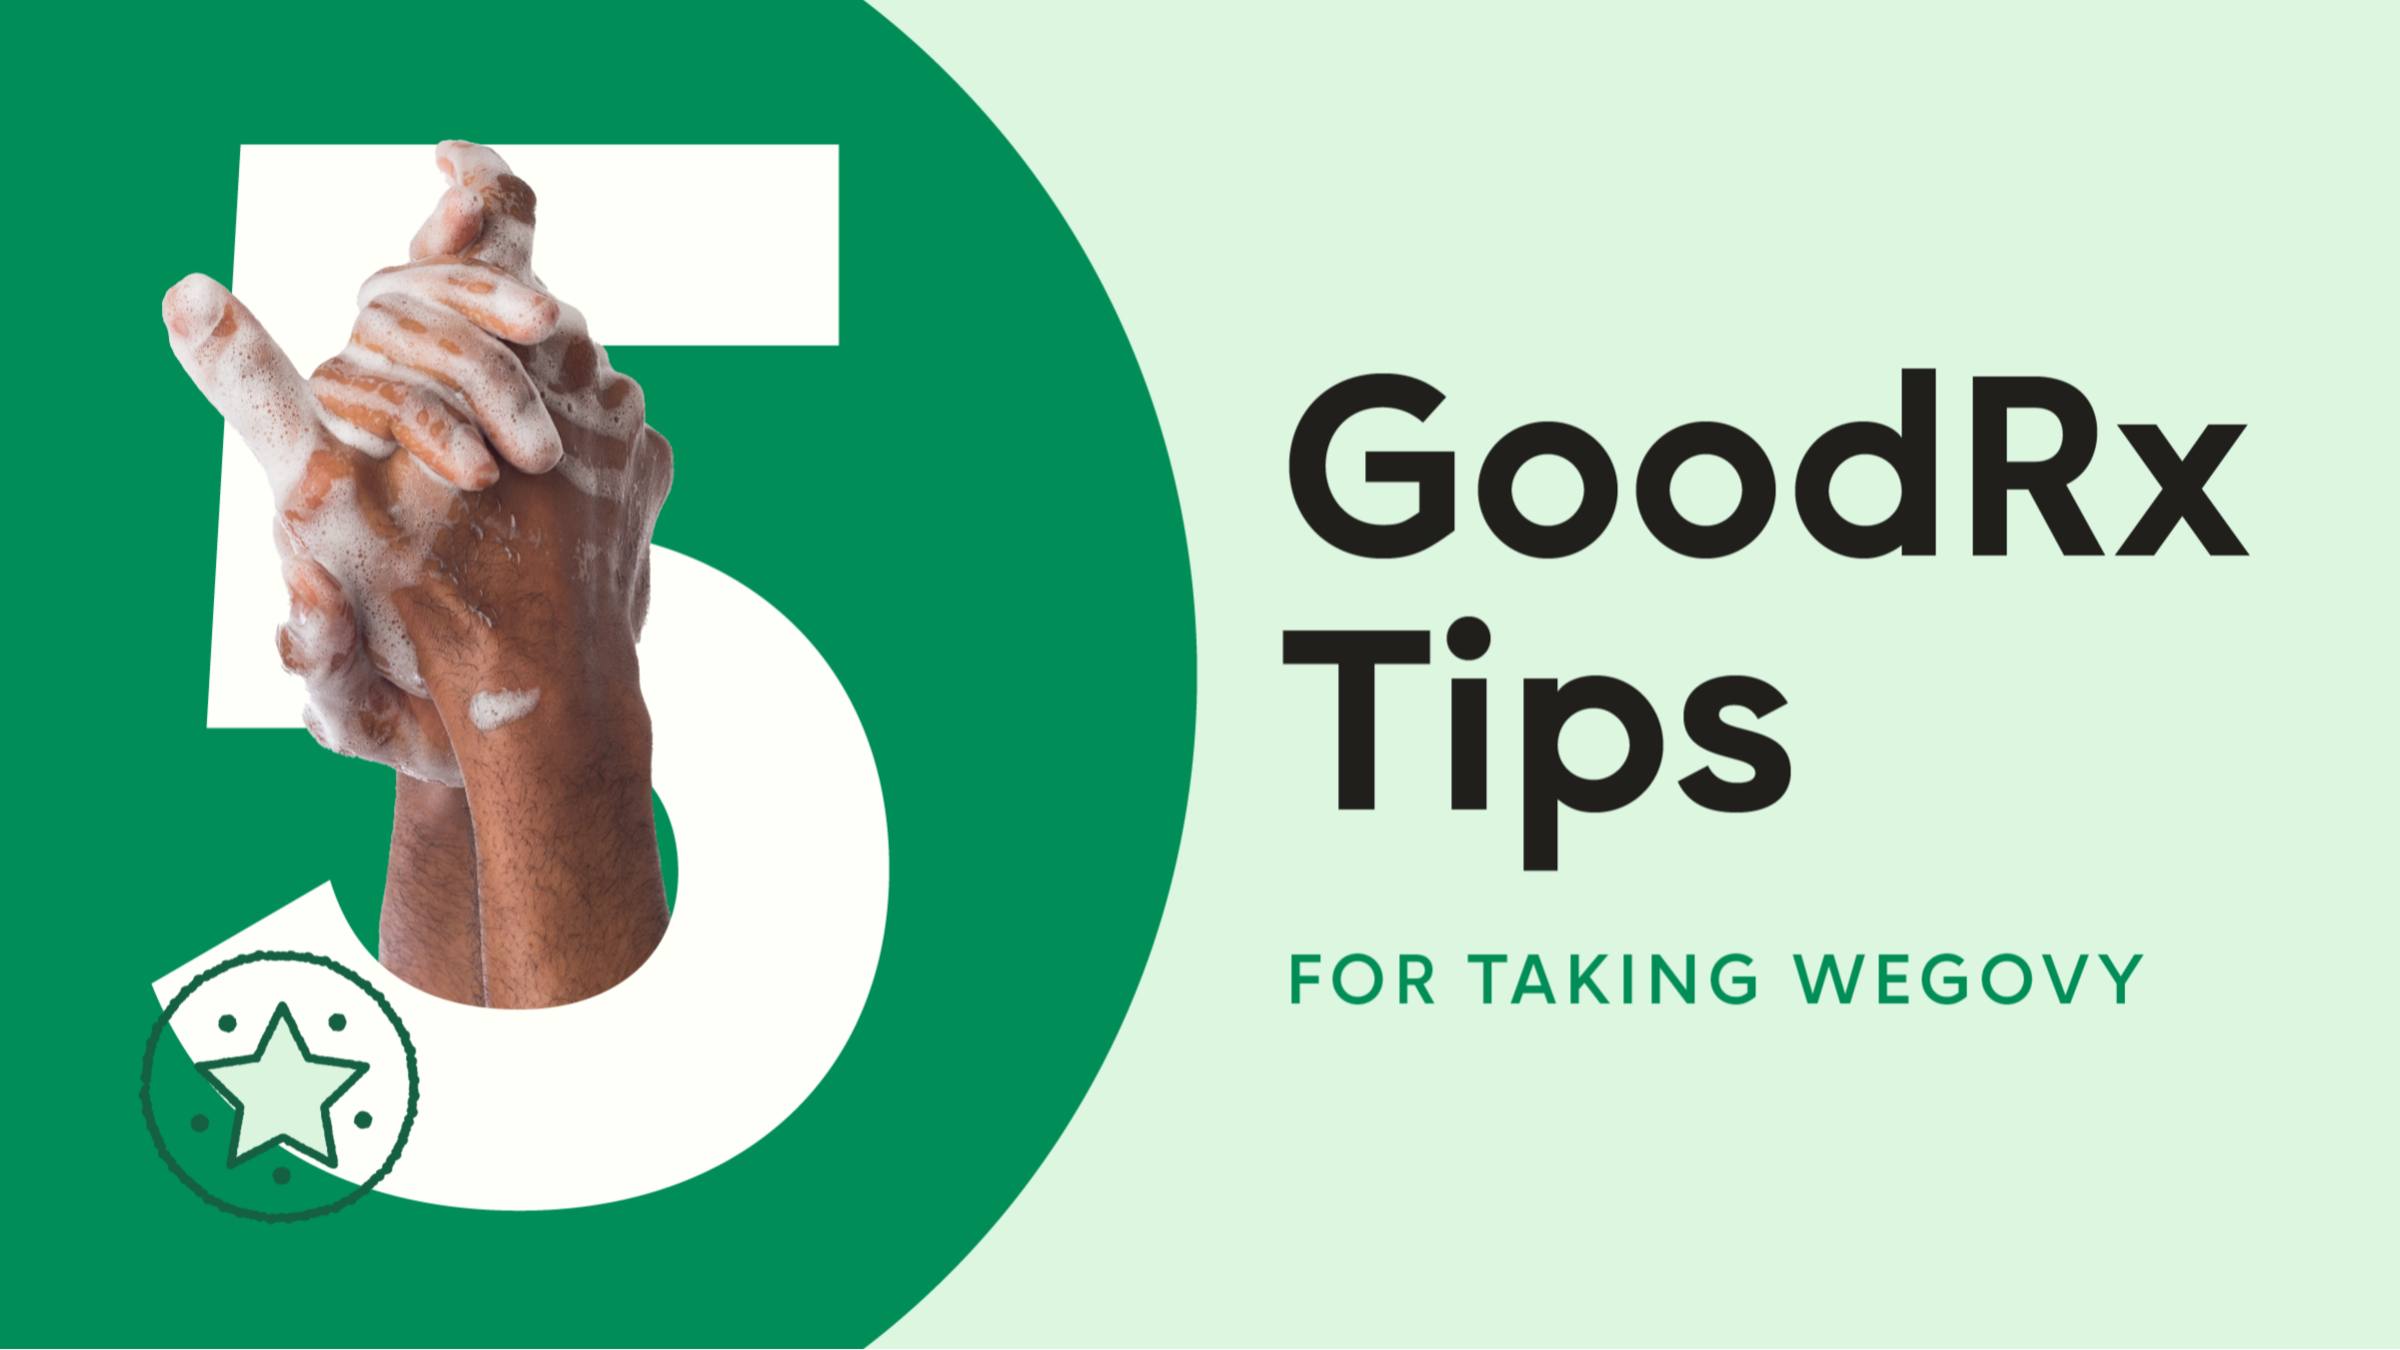 The Best Ways to Take Wegovy 5 PharmacistBacked Tips GoodRx